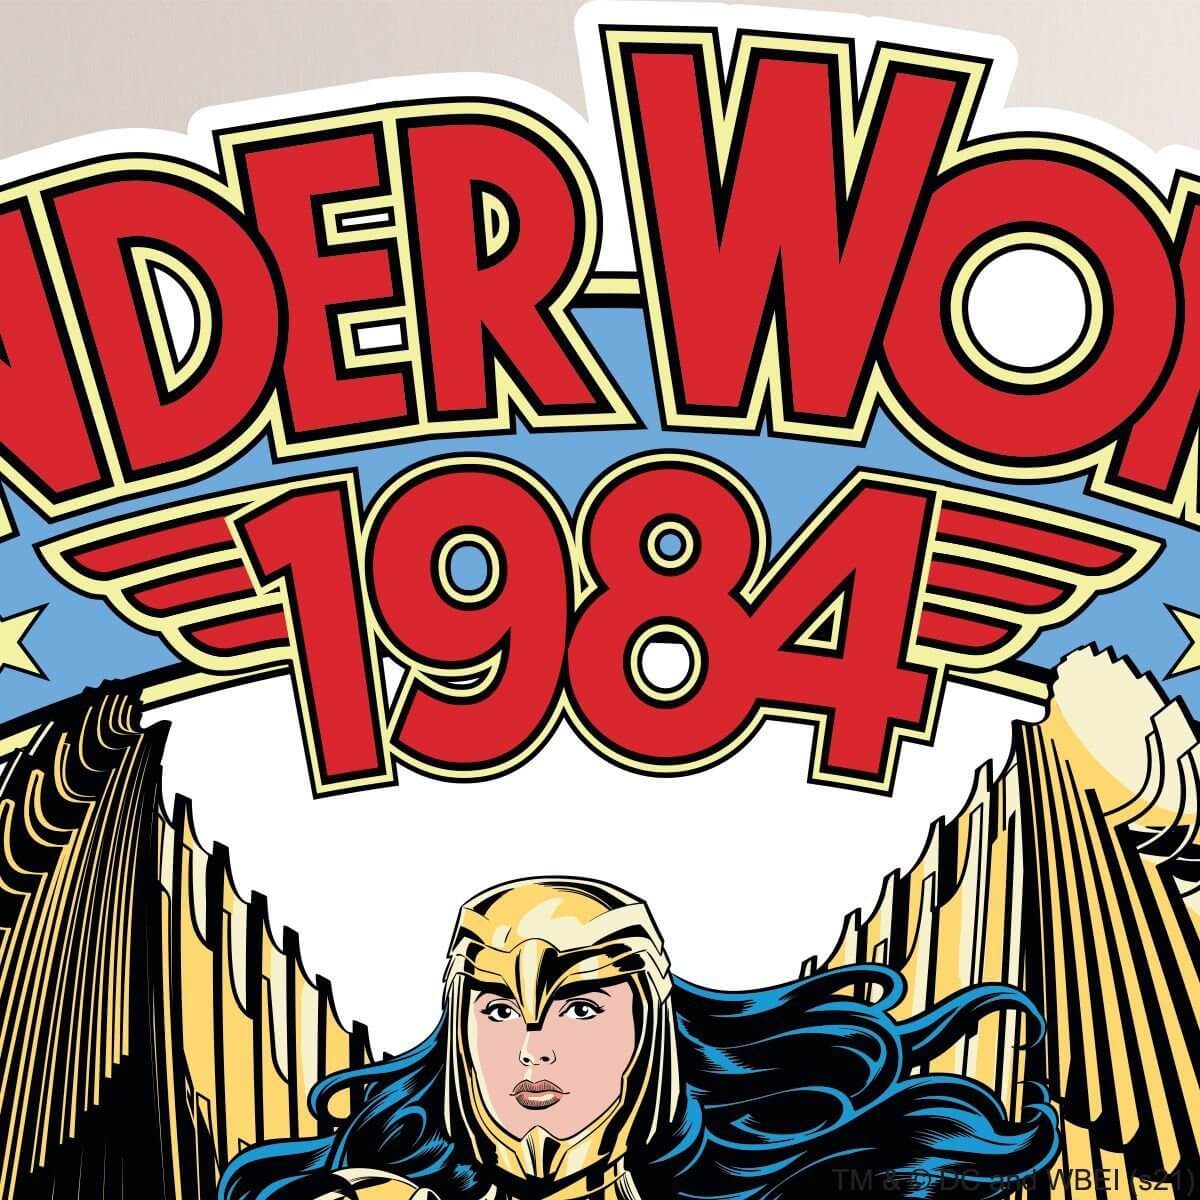 Kismet Decals WW84 Golden Eagle Armor Licensed Wall Sticker - Easy DIY Wonder Woman 1984 Home & Room Decor Comic Art - Kismet Decals